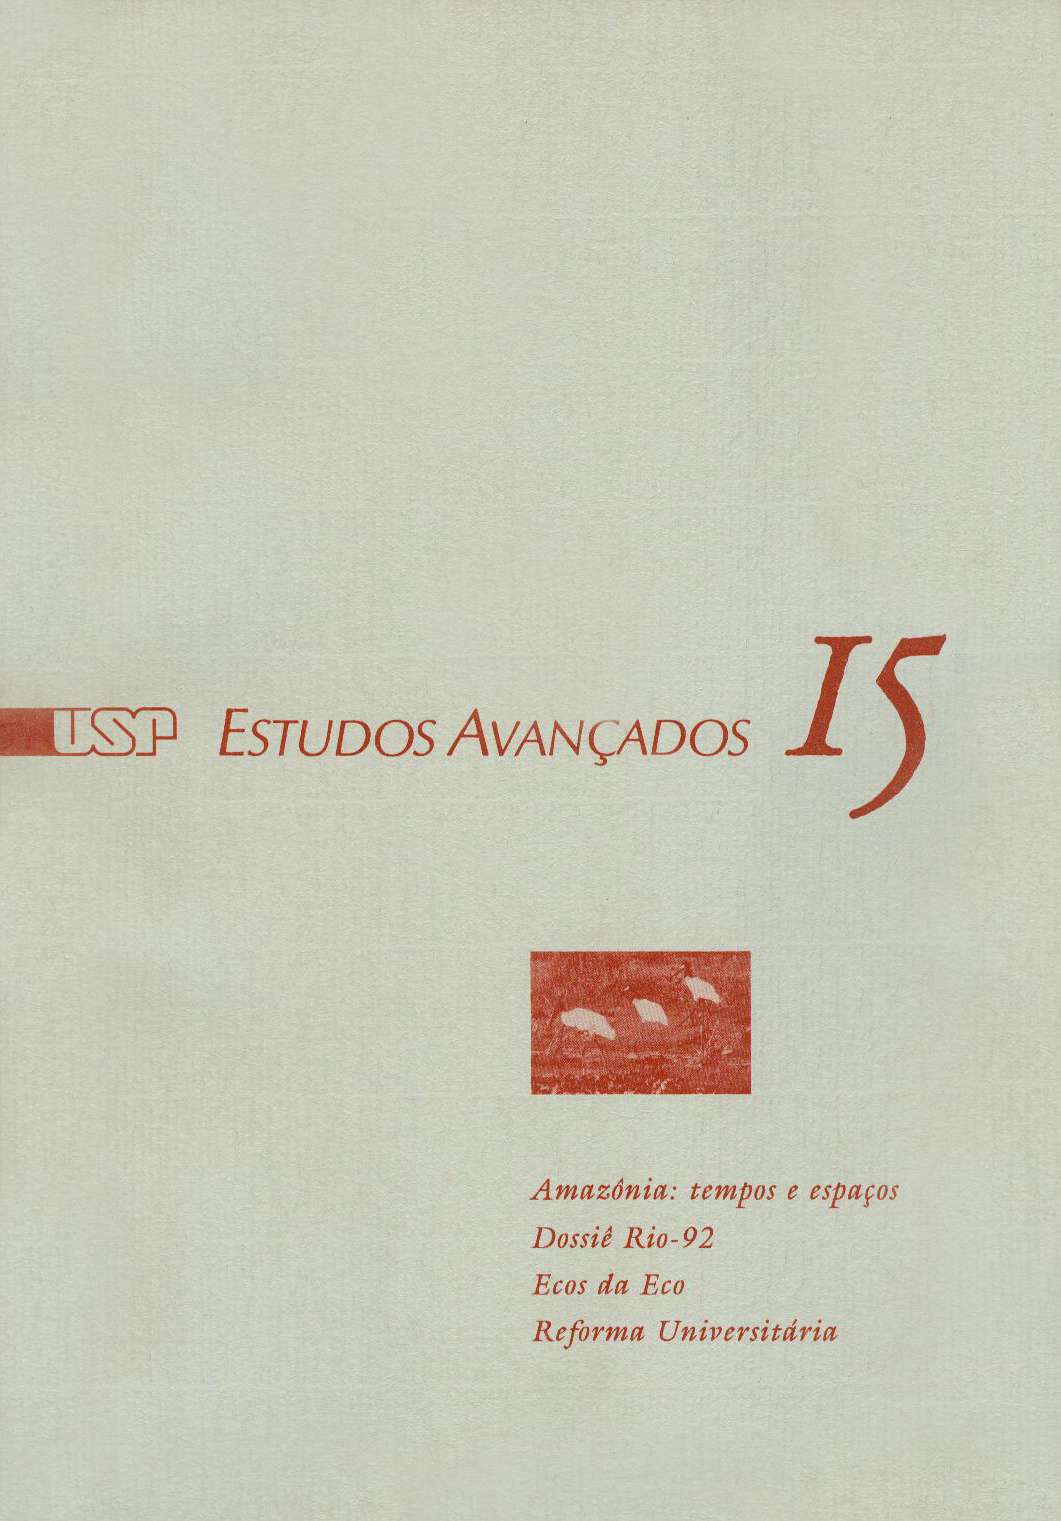 					Visualizar v. 6 n. 15 (1992)
				